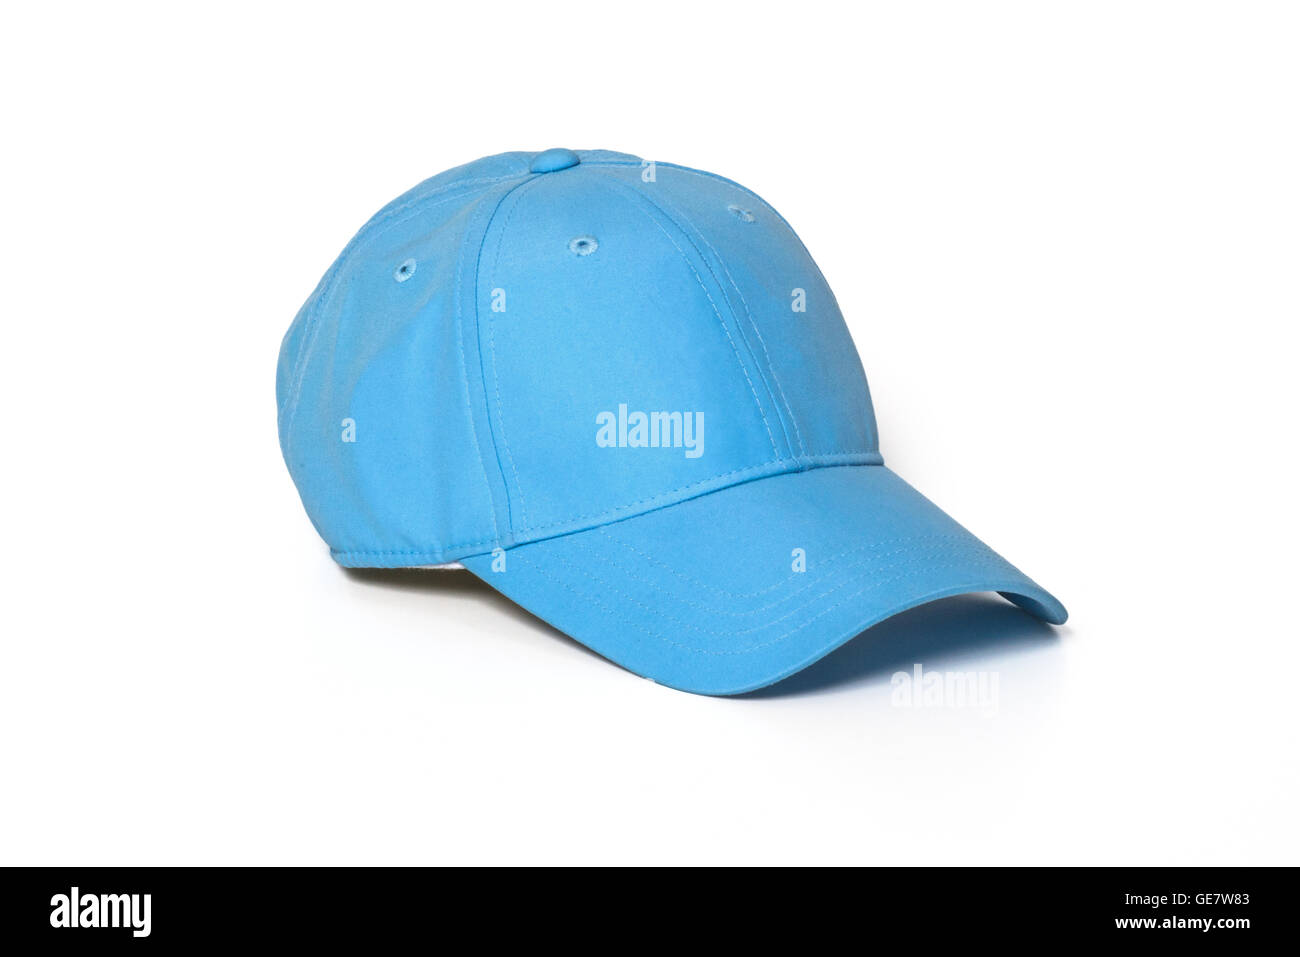 Light blue adult golf or baseball cap on white background Stock Photo